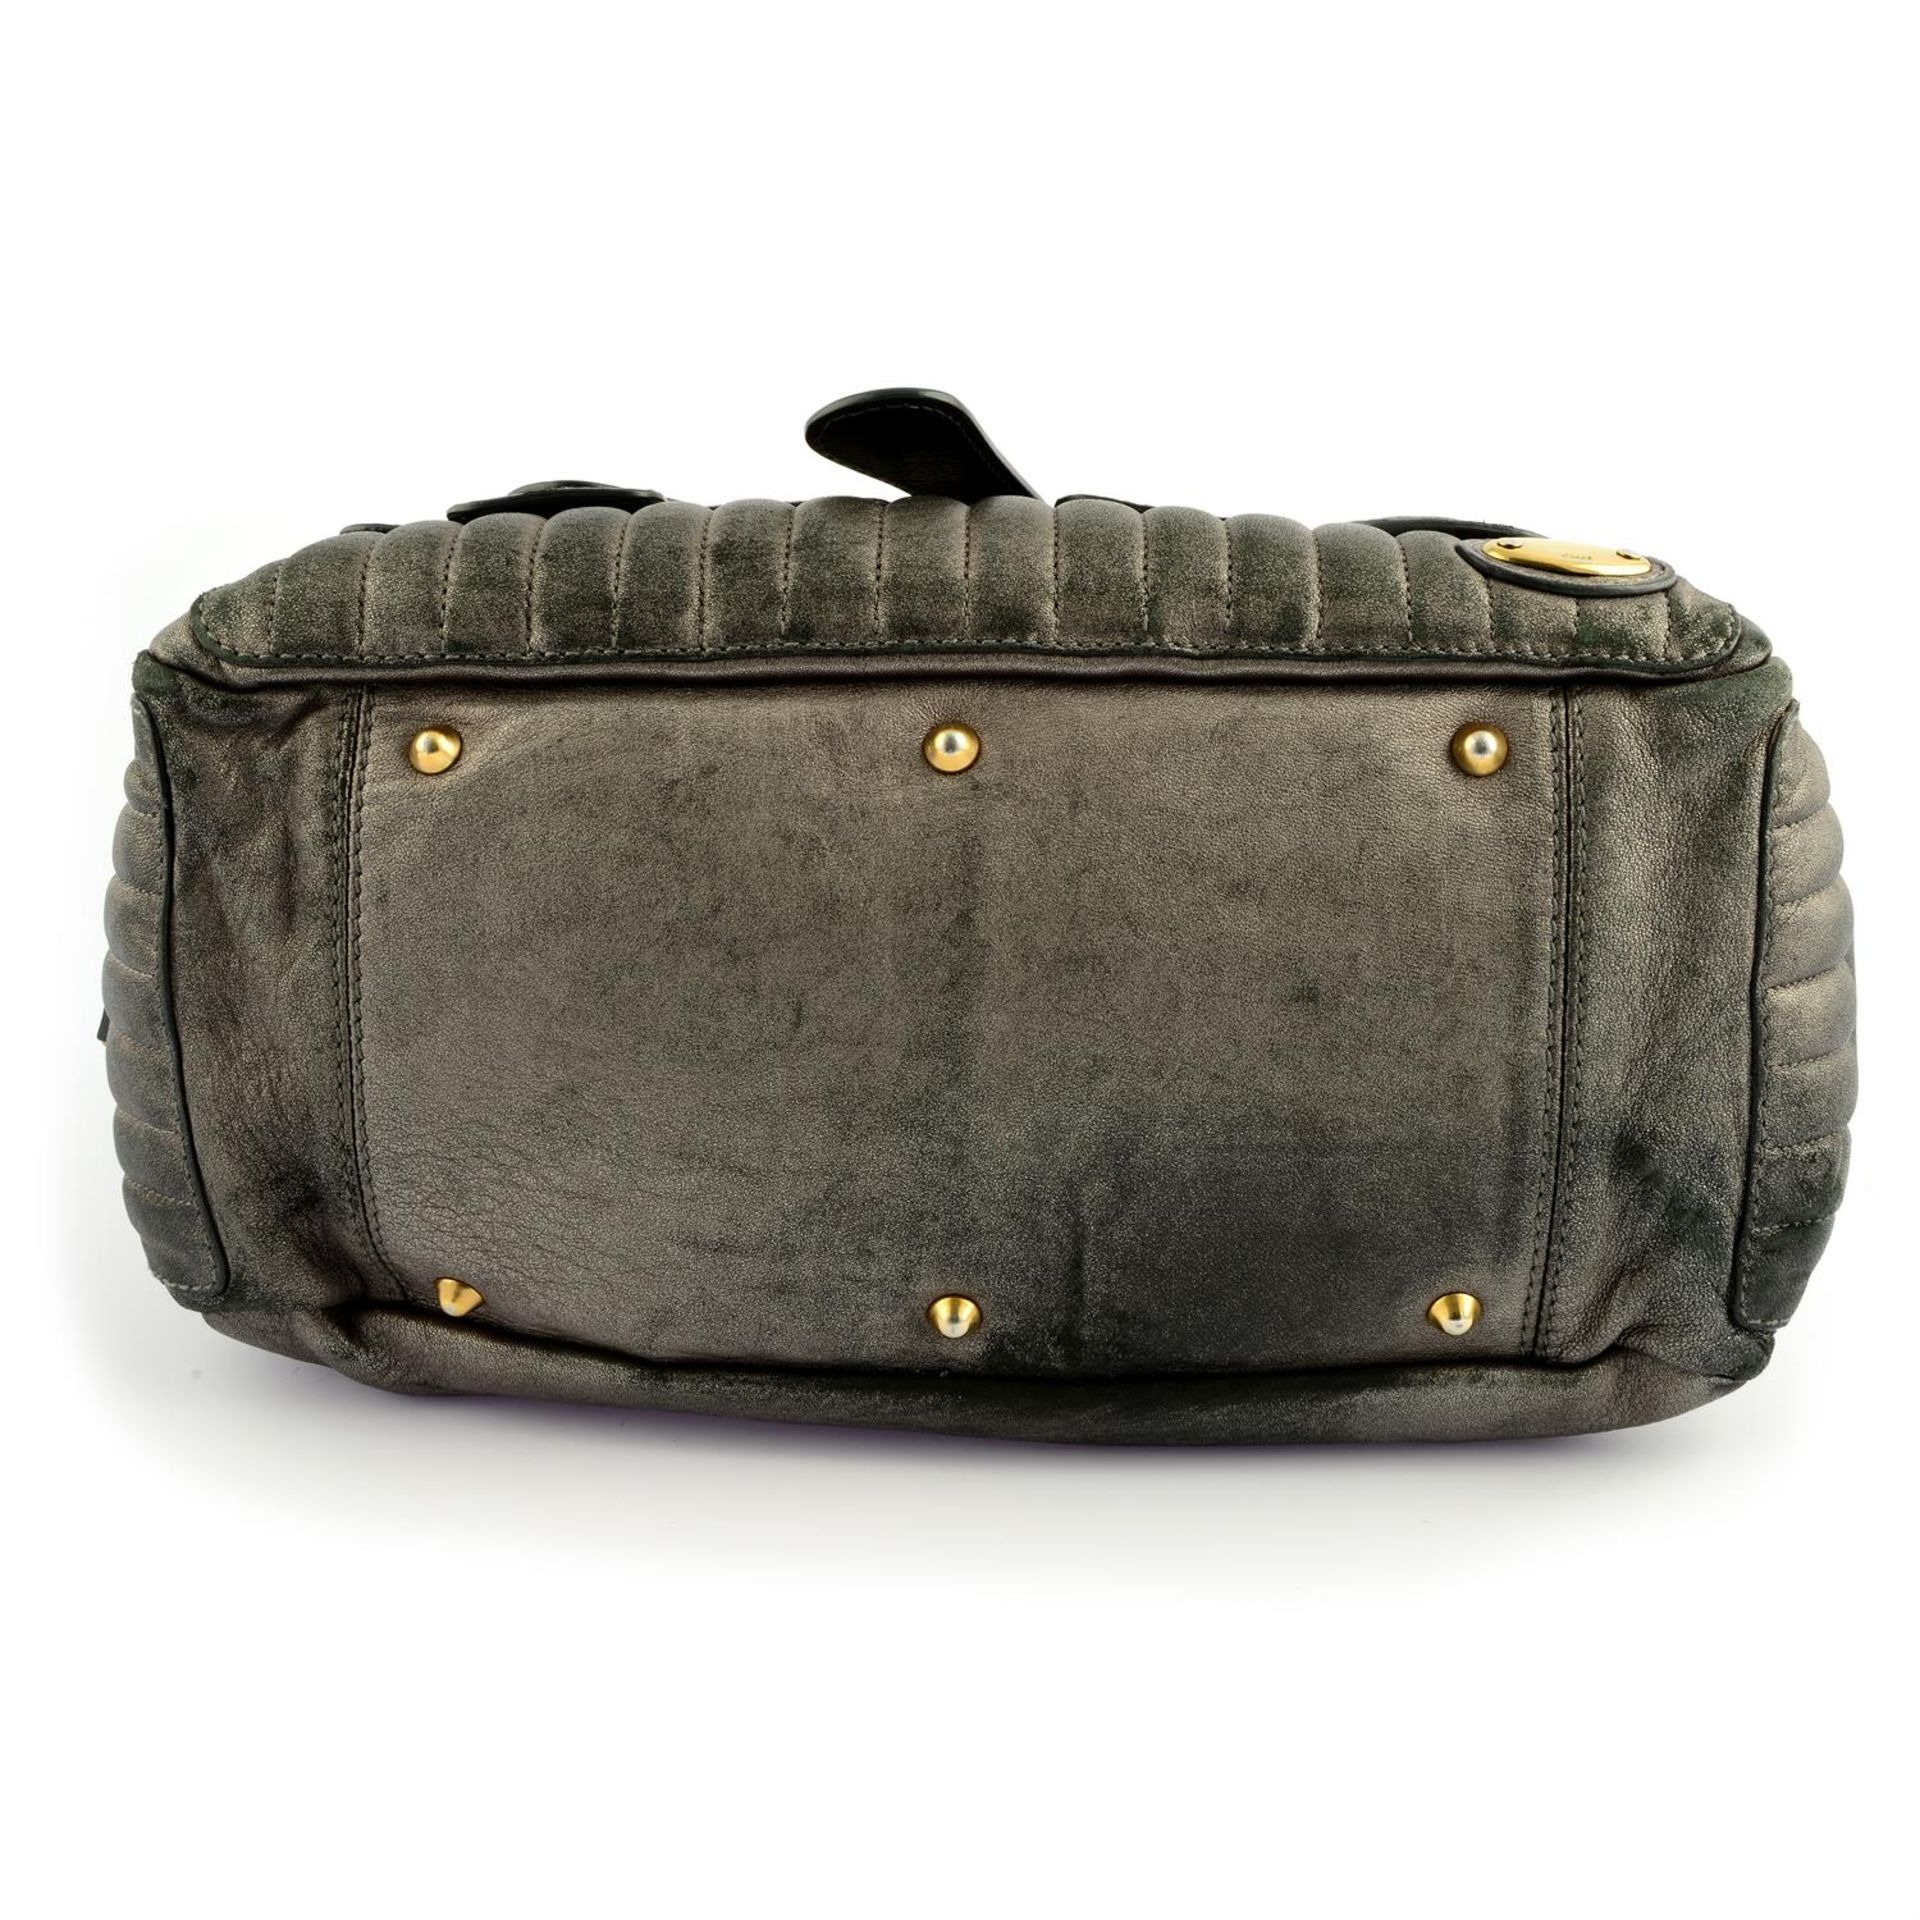 CHLOÉ- a gunmetal leather Bay handbag. - Image 4 of 5